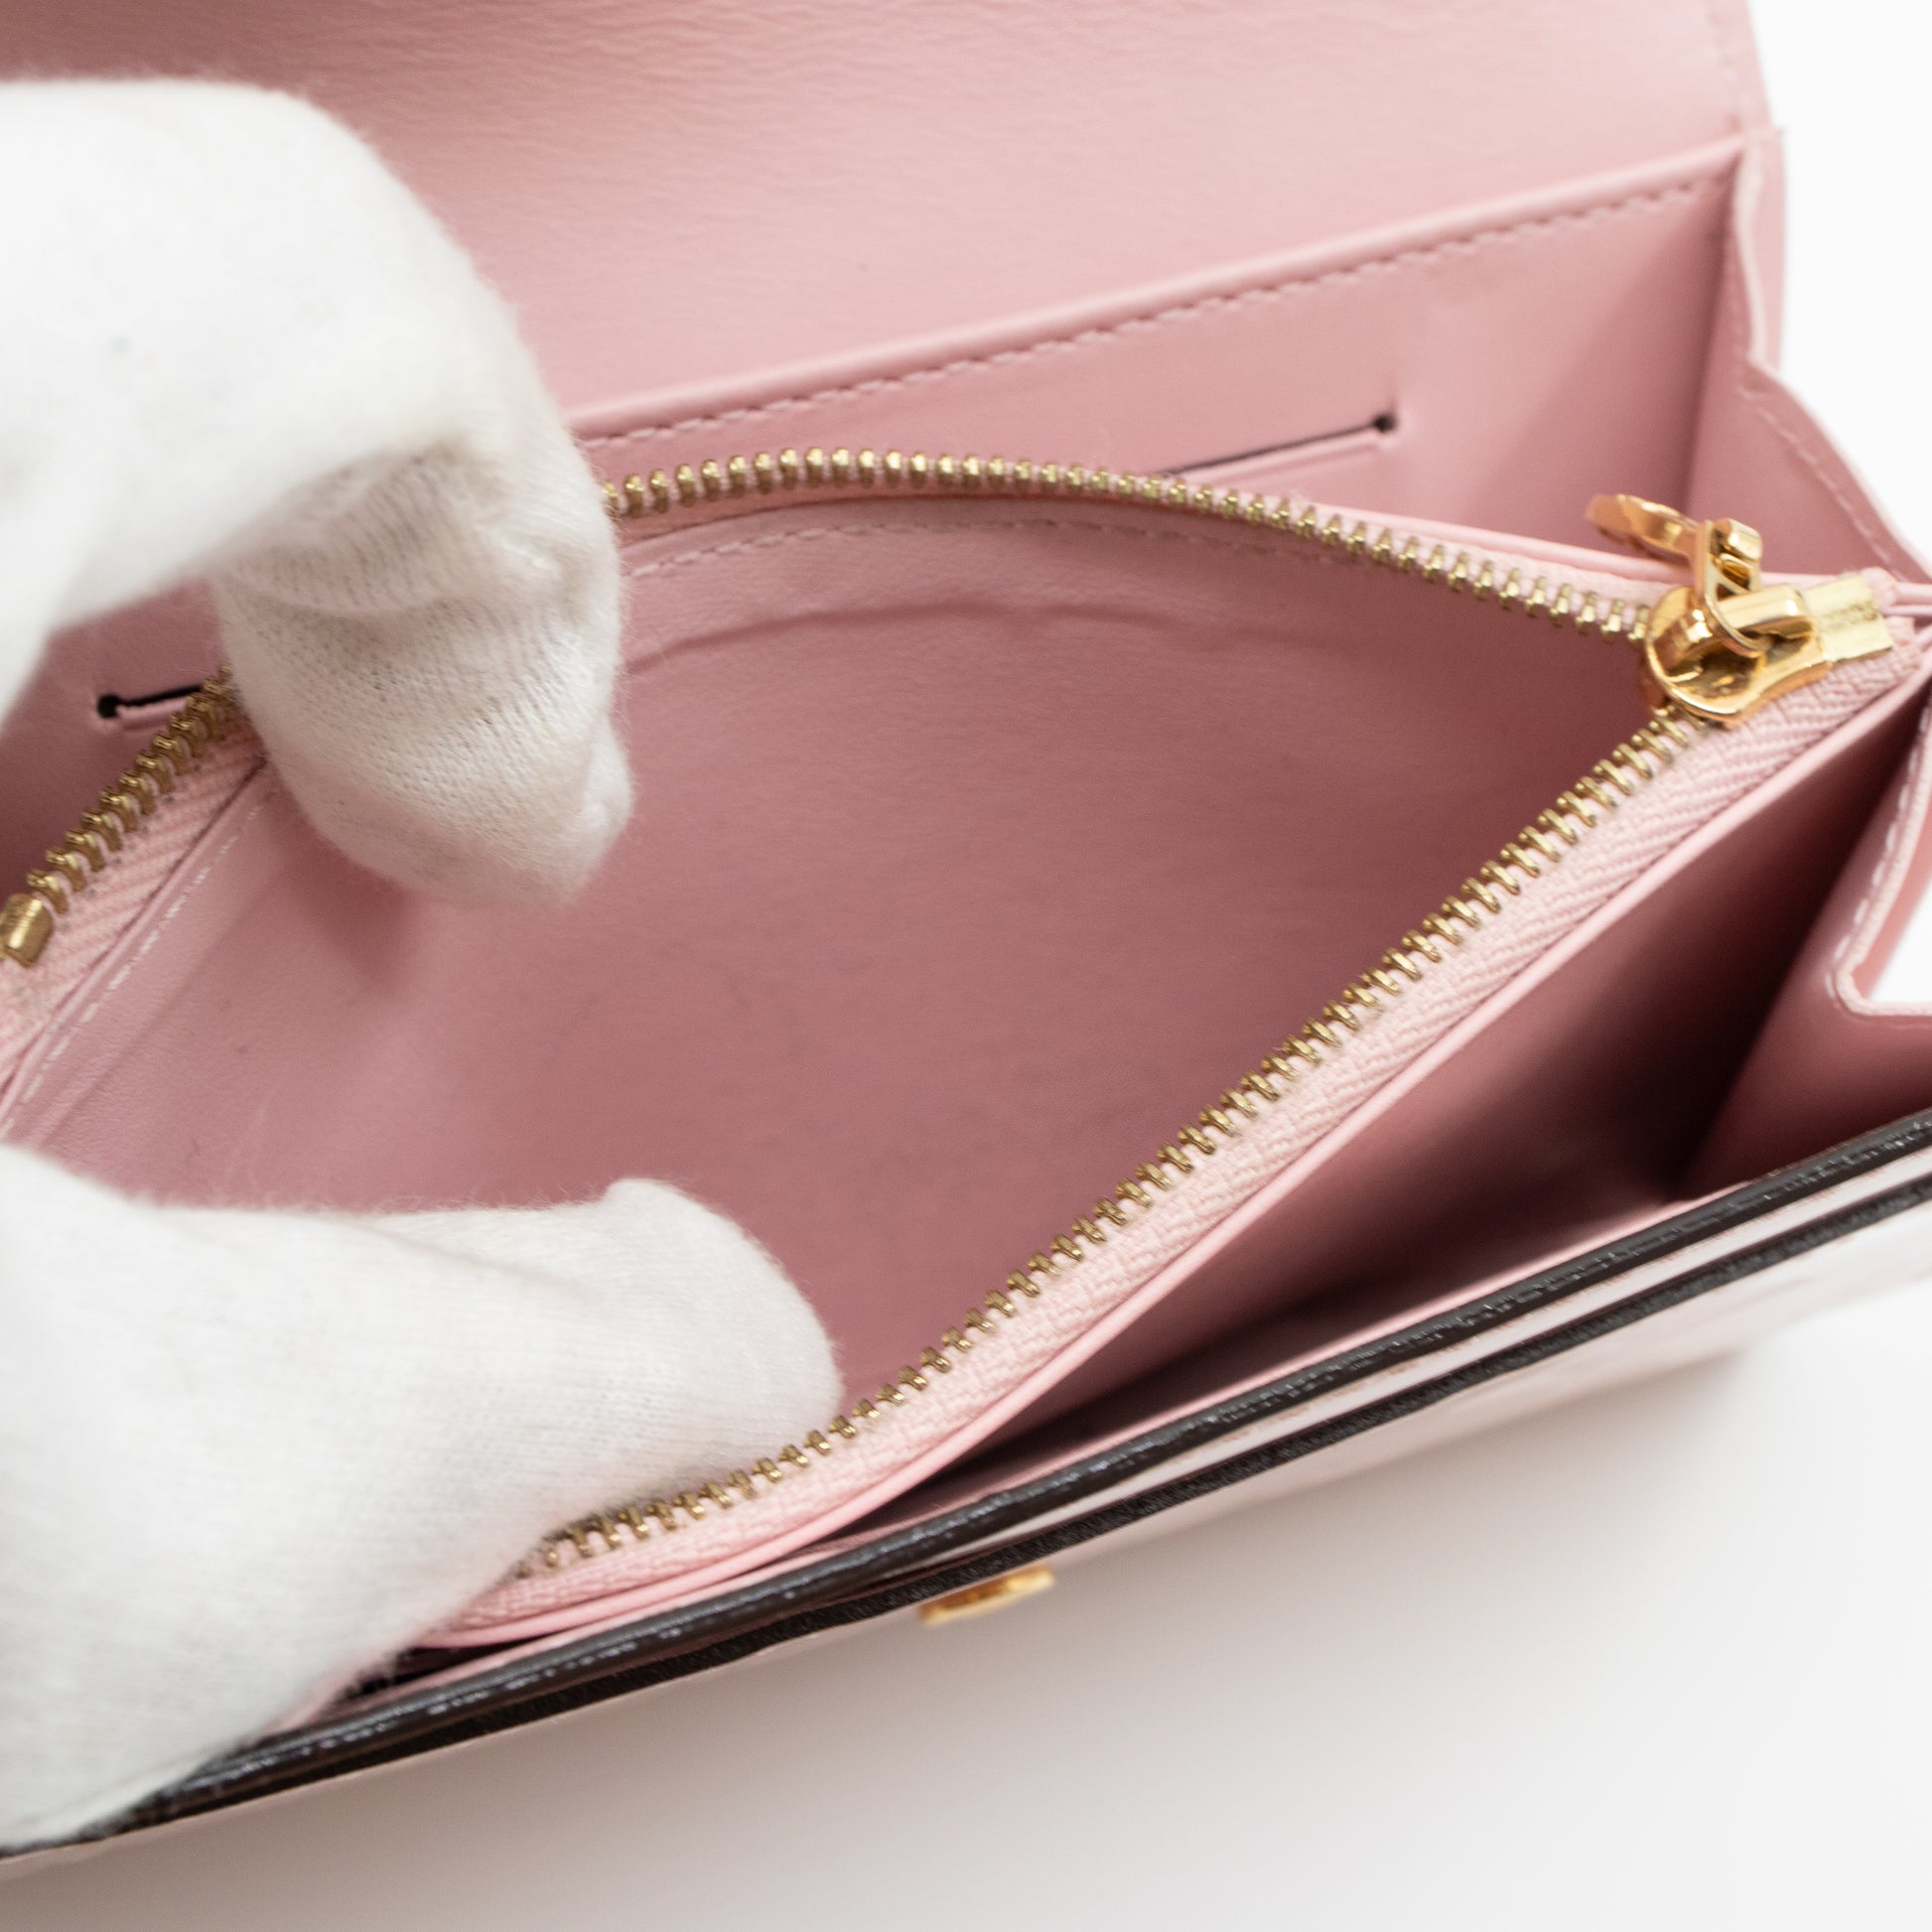 Louis Vuitton • Vernis Sarah Wallet Retail $840 Beige $199 • Pink